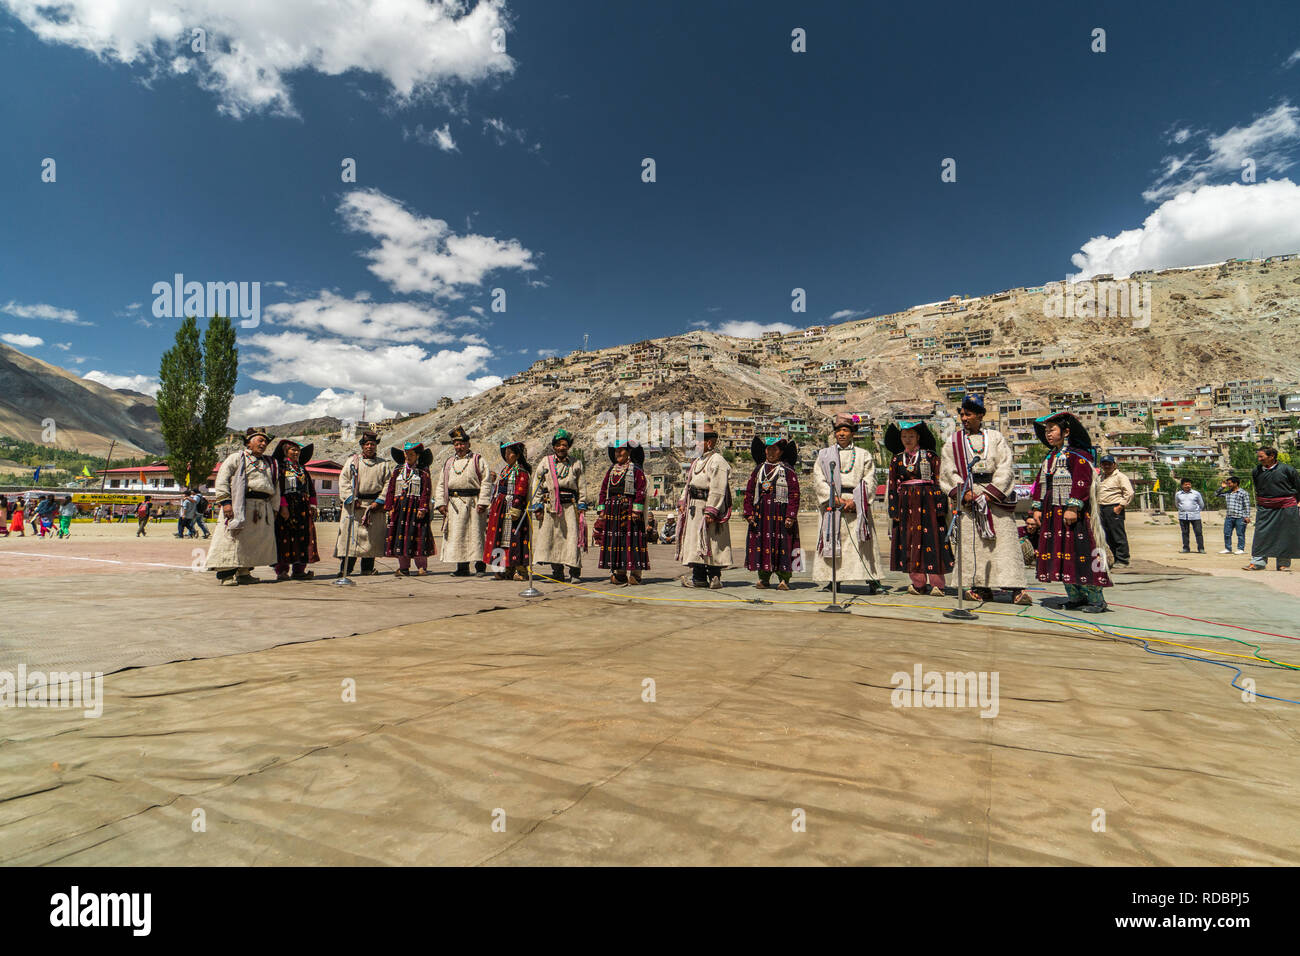 Ladakh, India - 4 de septiembre de 2018: grupo de cantantes en ropa tradicional de realizar el festival en Ladakh. Editorial ilustrativos. Foto de stock